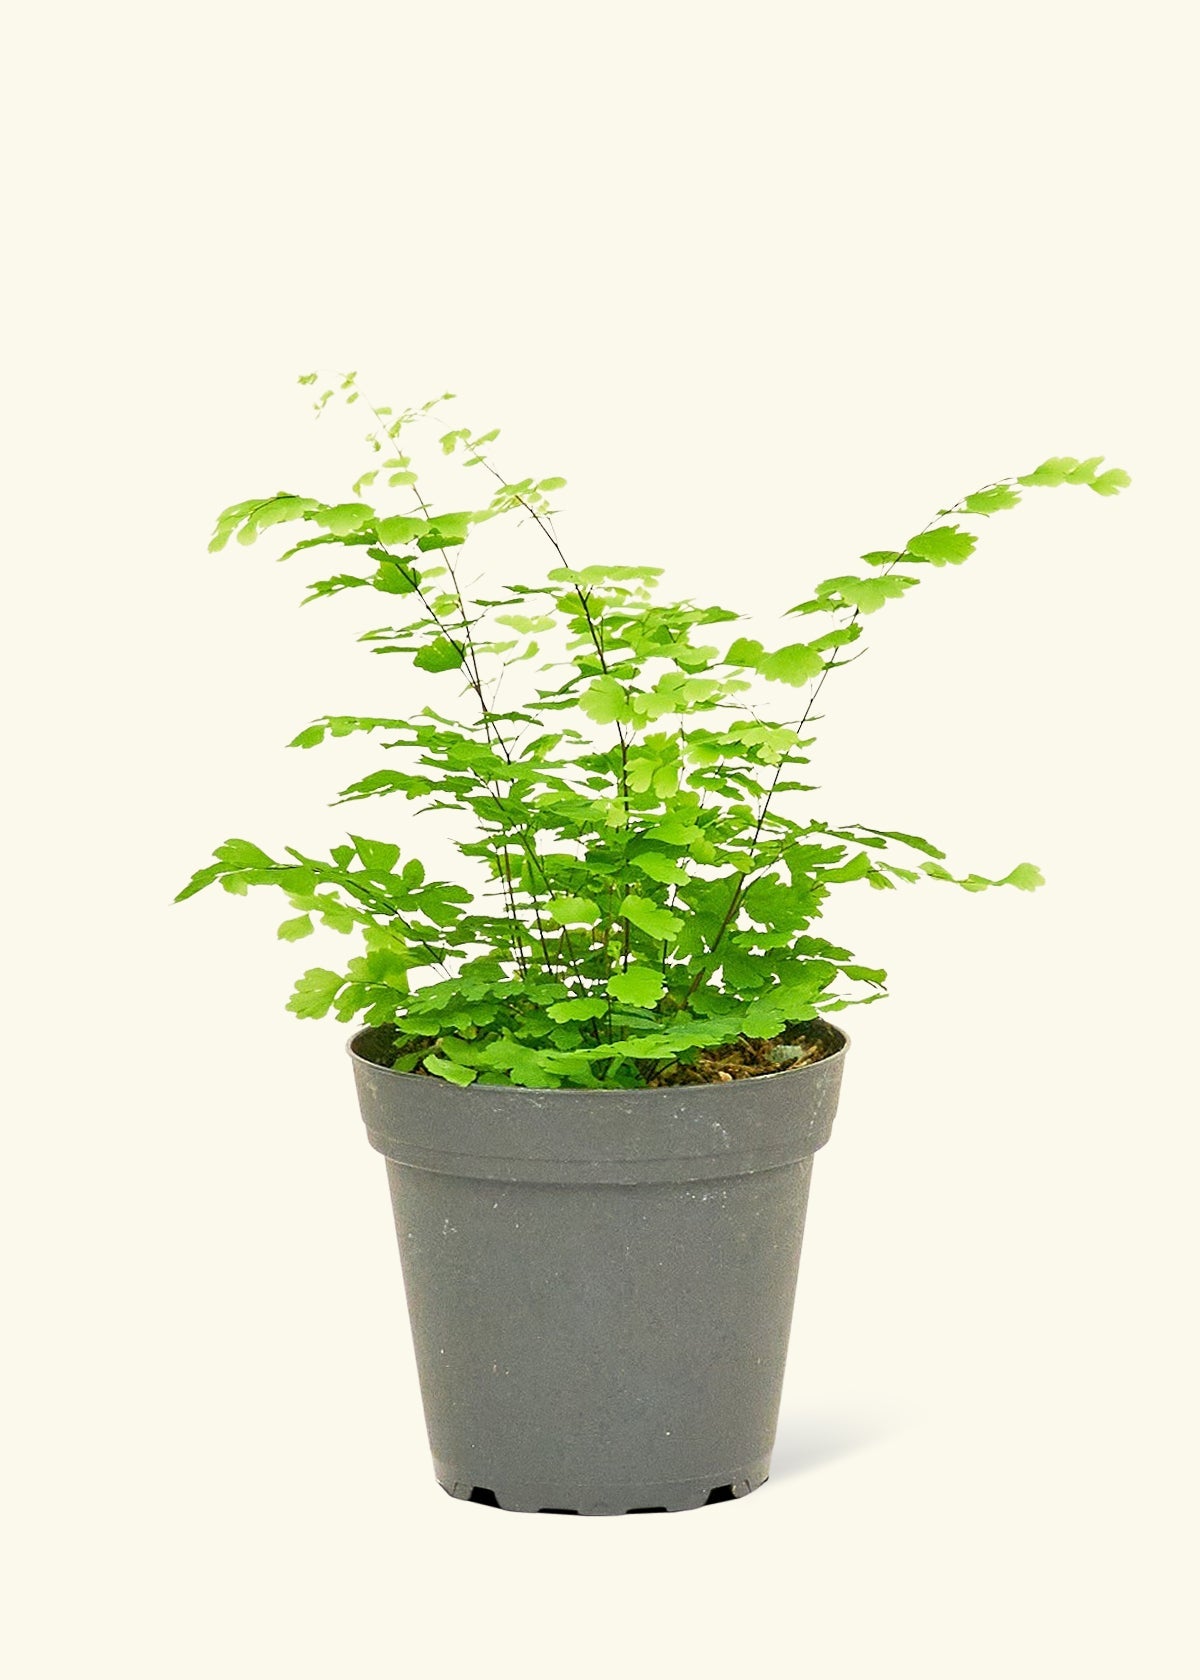 Small Maidenhair Fern (Adiantum aethiopicum) in a grow pot.